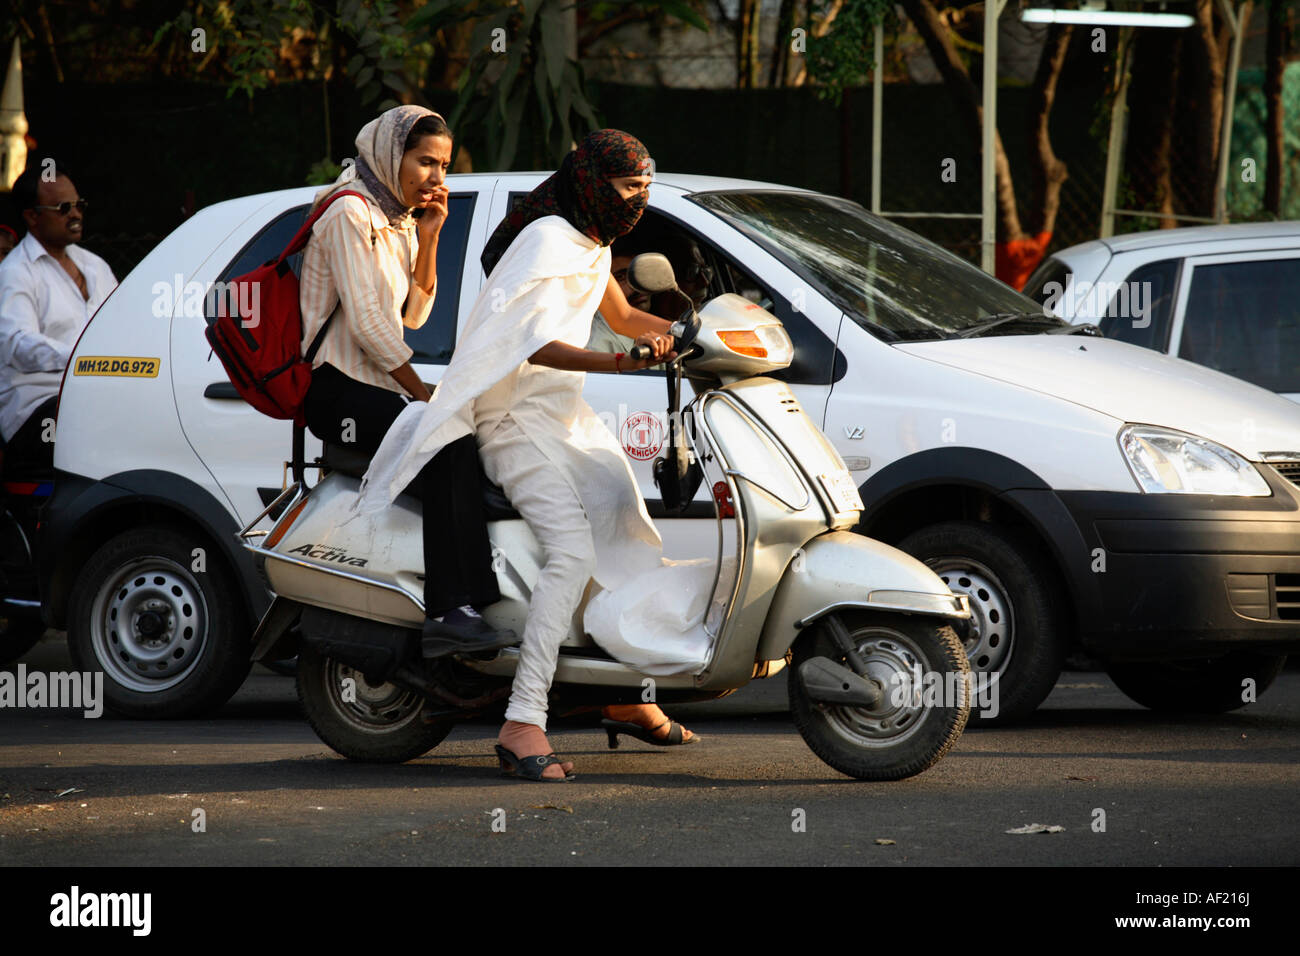 Giovane donna indiana che guida scooter senza casco indossare kameez salwaar nel traffico intenso, Pune, India Foto Stock